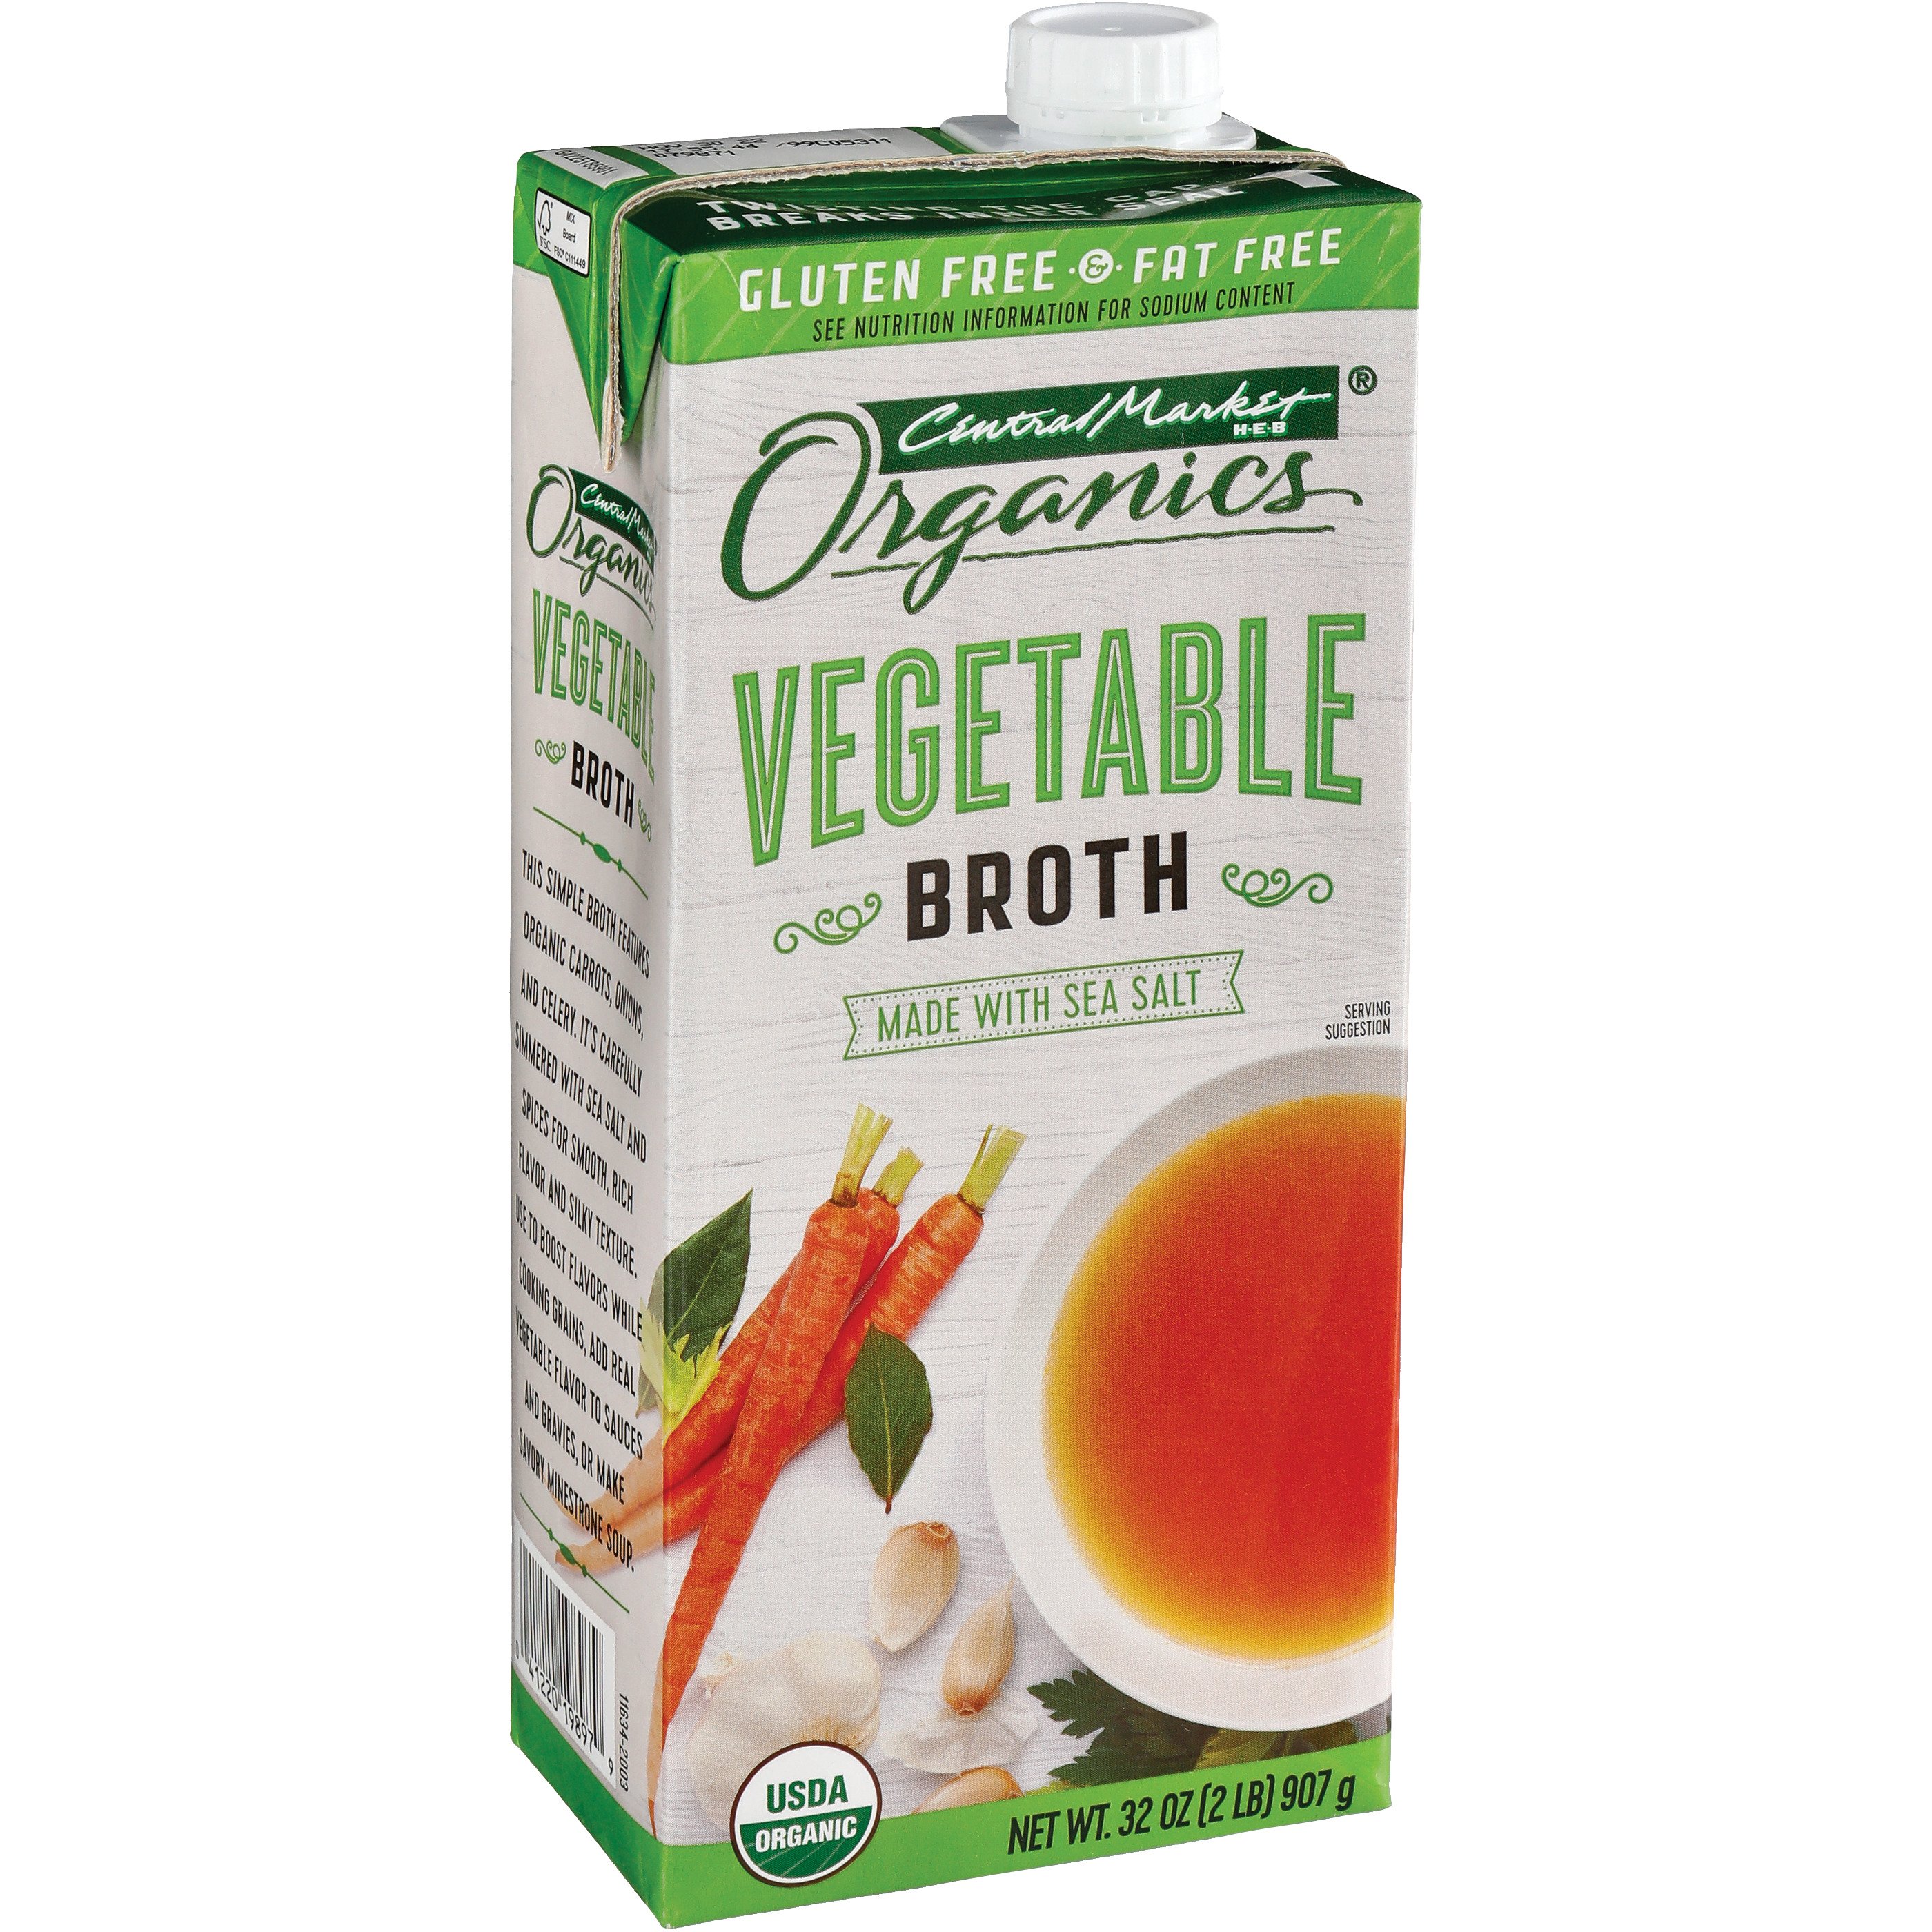 Central Market Organics Vegetable Broth - Shop Broth & Bouillon at H-E-B